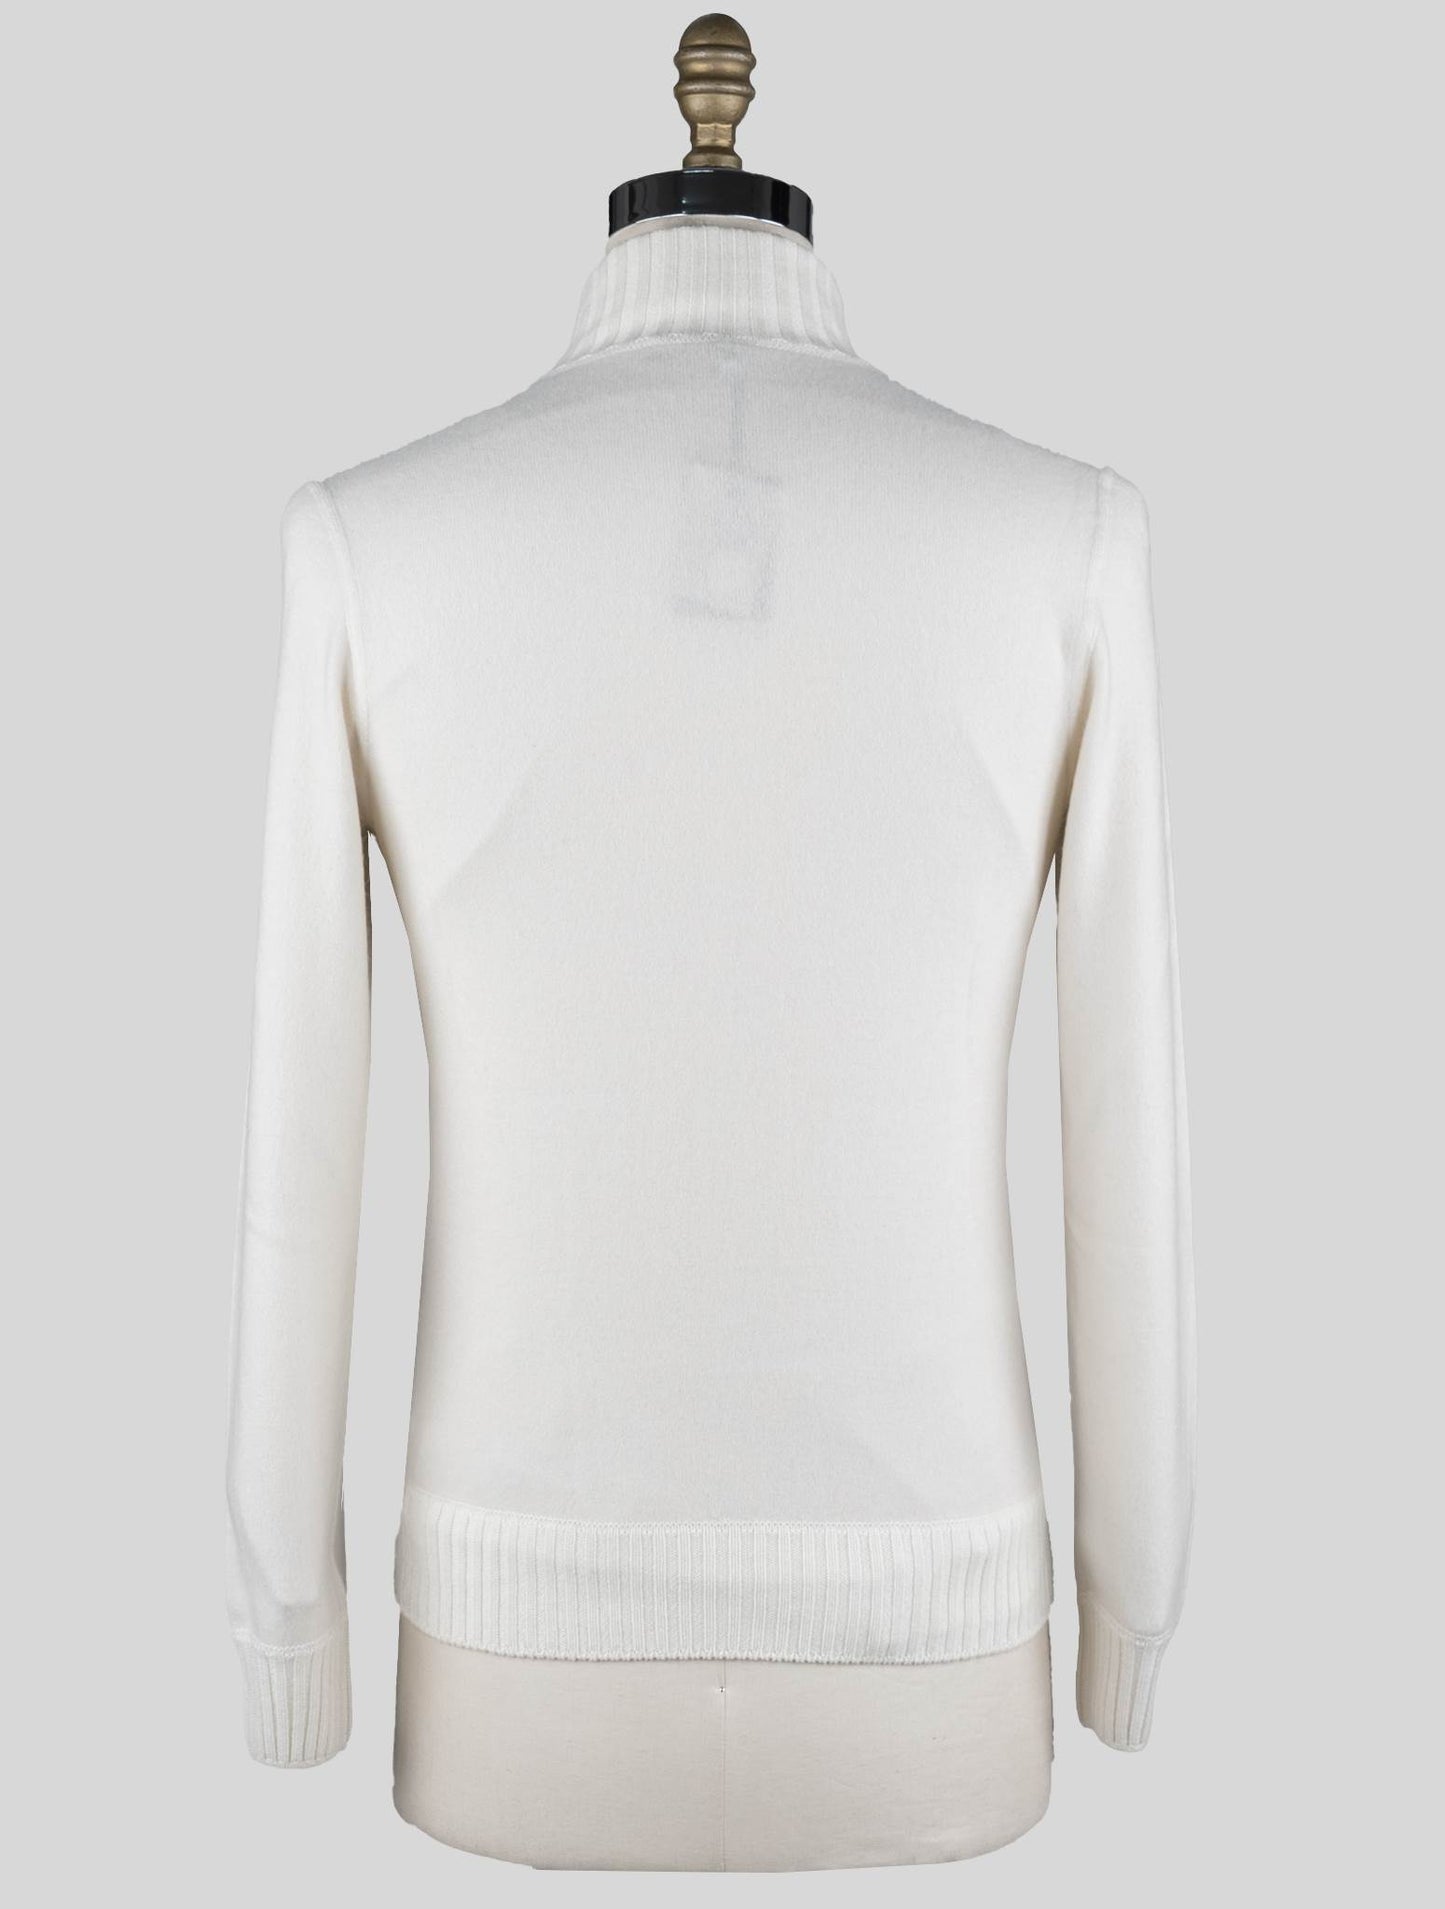 Բարբա Նապոլի Սպիտակ Cashmere Sweater Cardigan